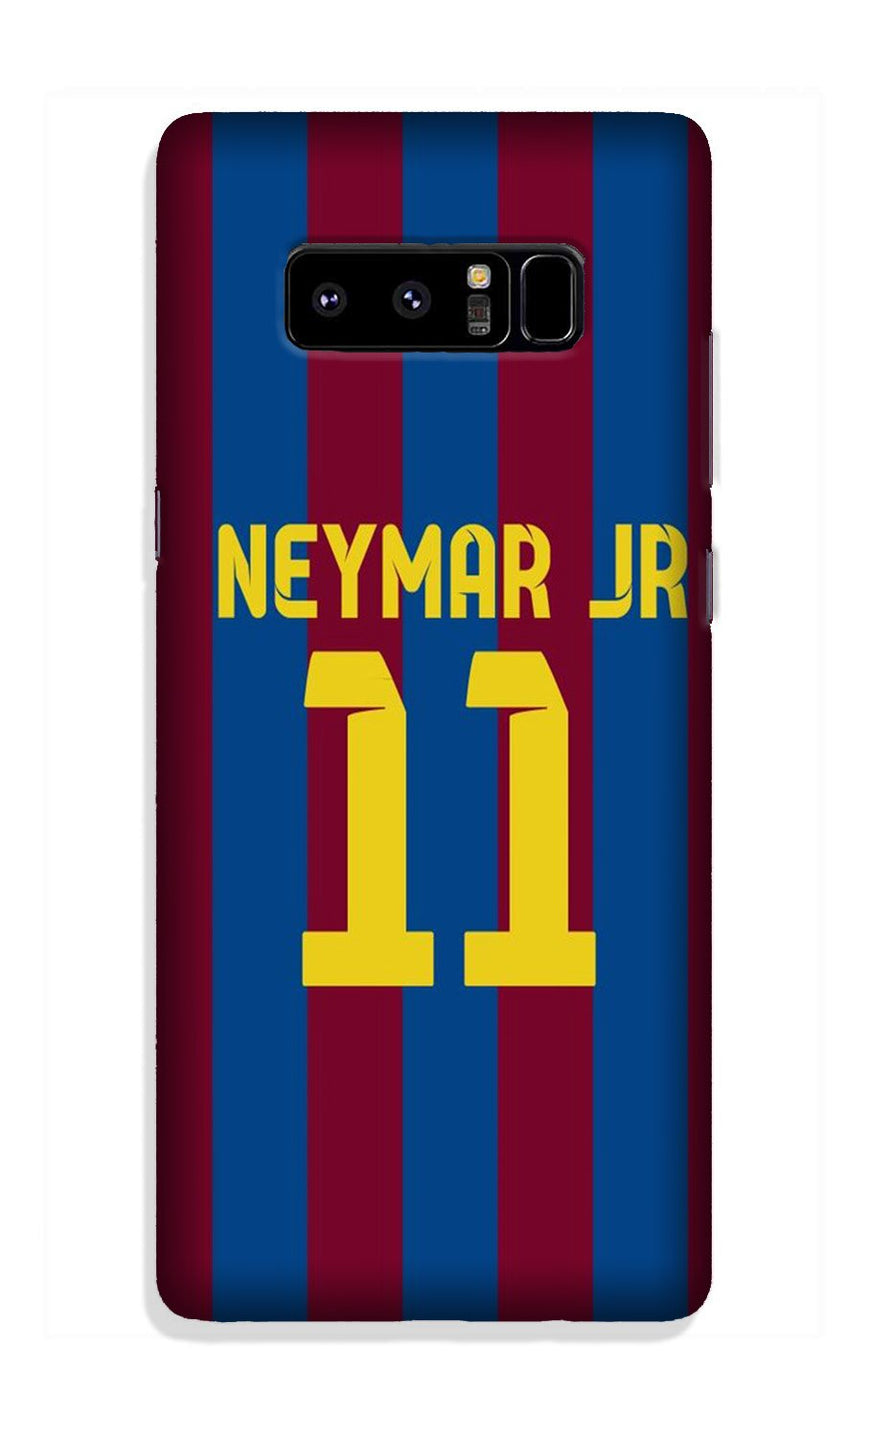 Neymar Jr Case for Galaxy Note 8  (Design - 162)